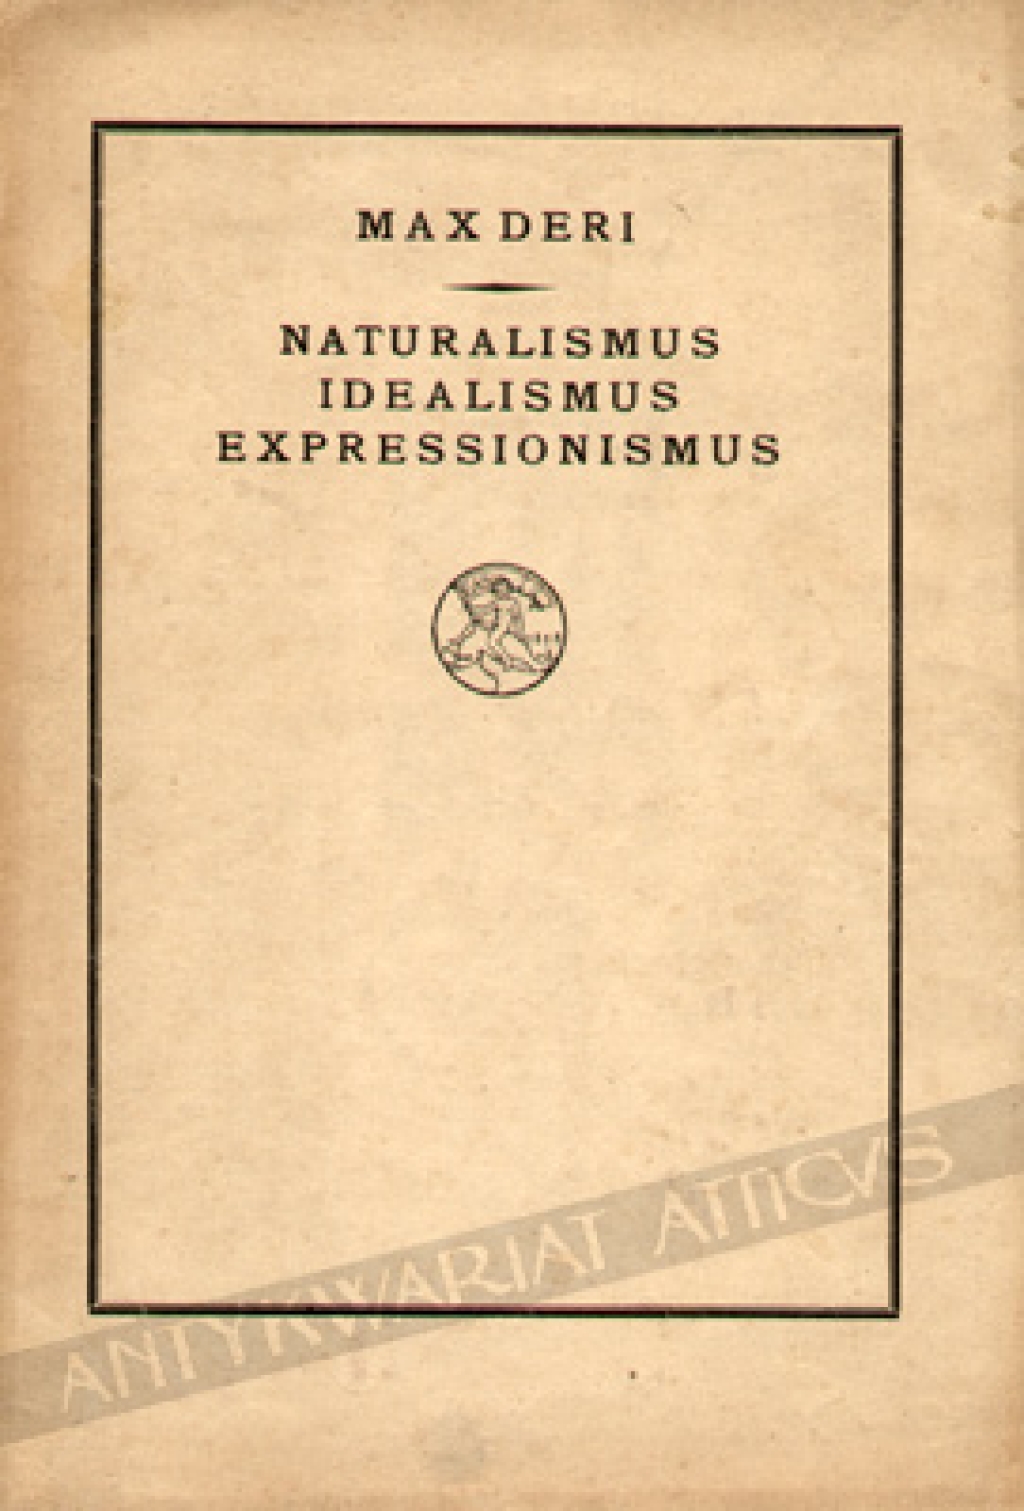 Naturalismus, Idealismus, Expressionismus